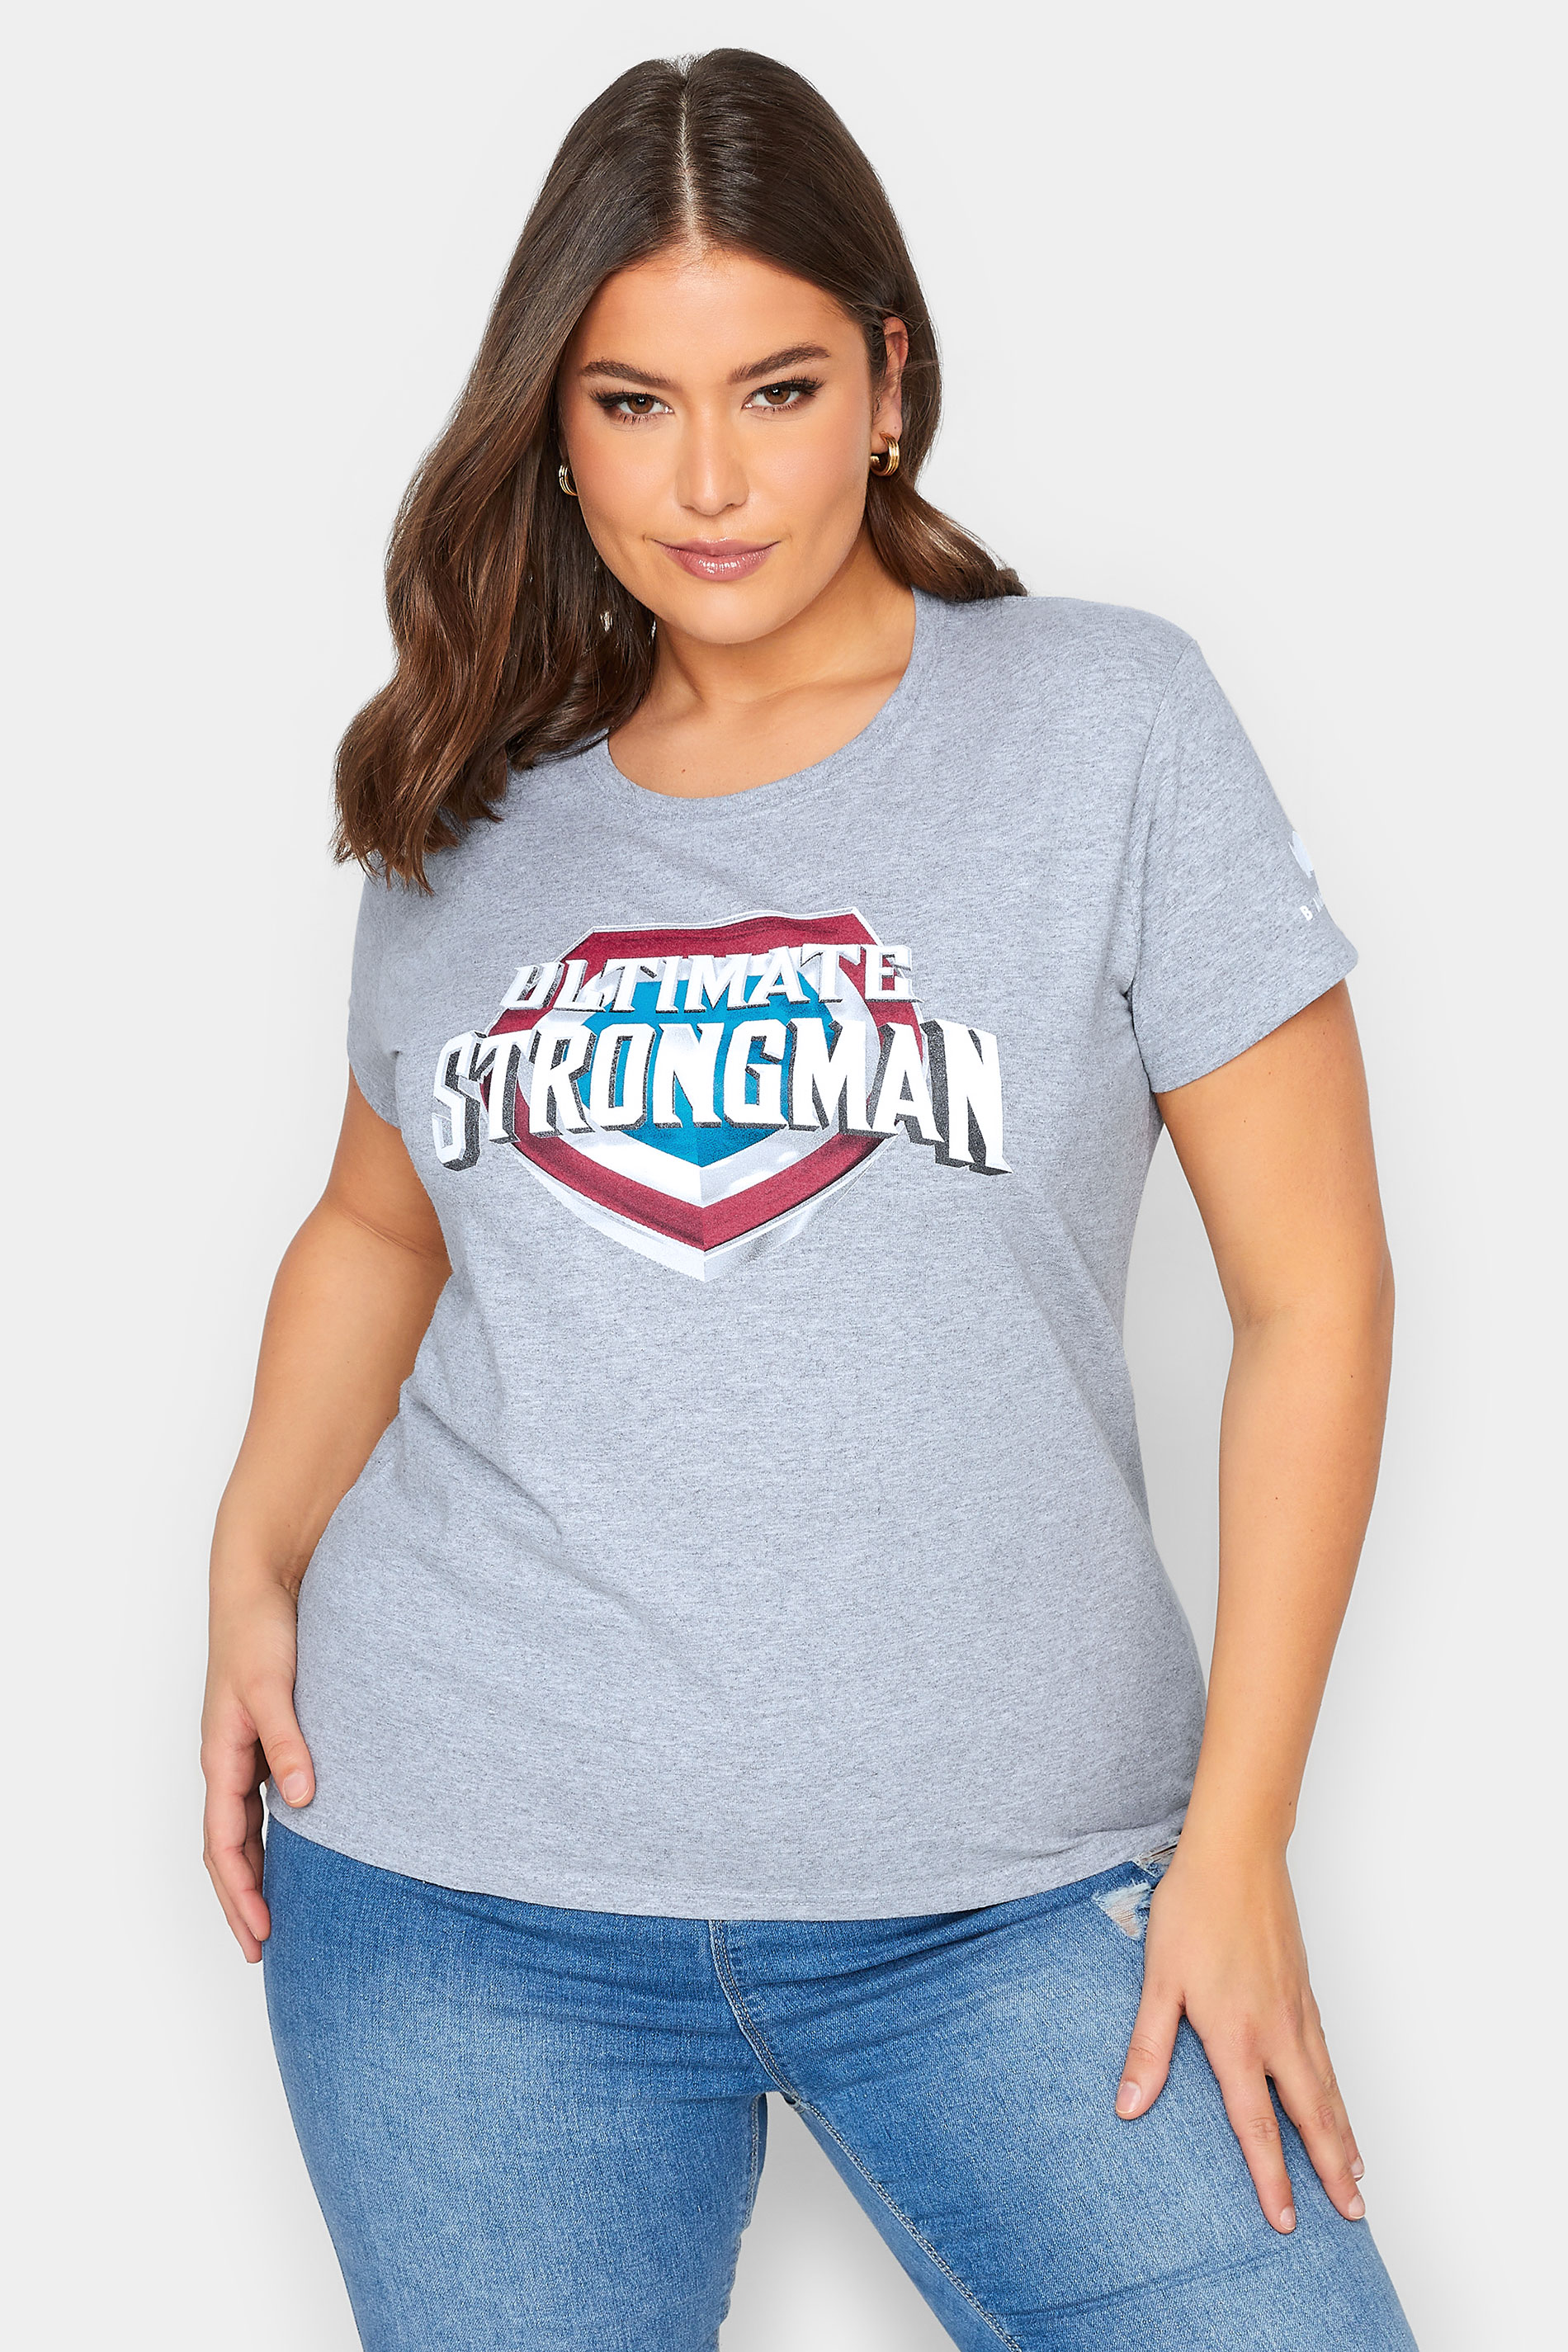 BadRhino Women's Grey Ultimate Strongman T-Shirt | BadRhino 1